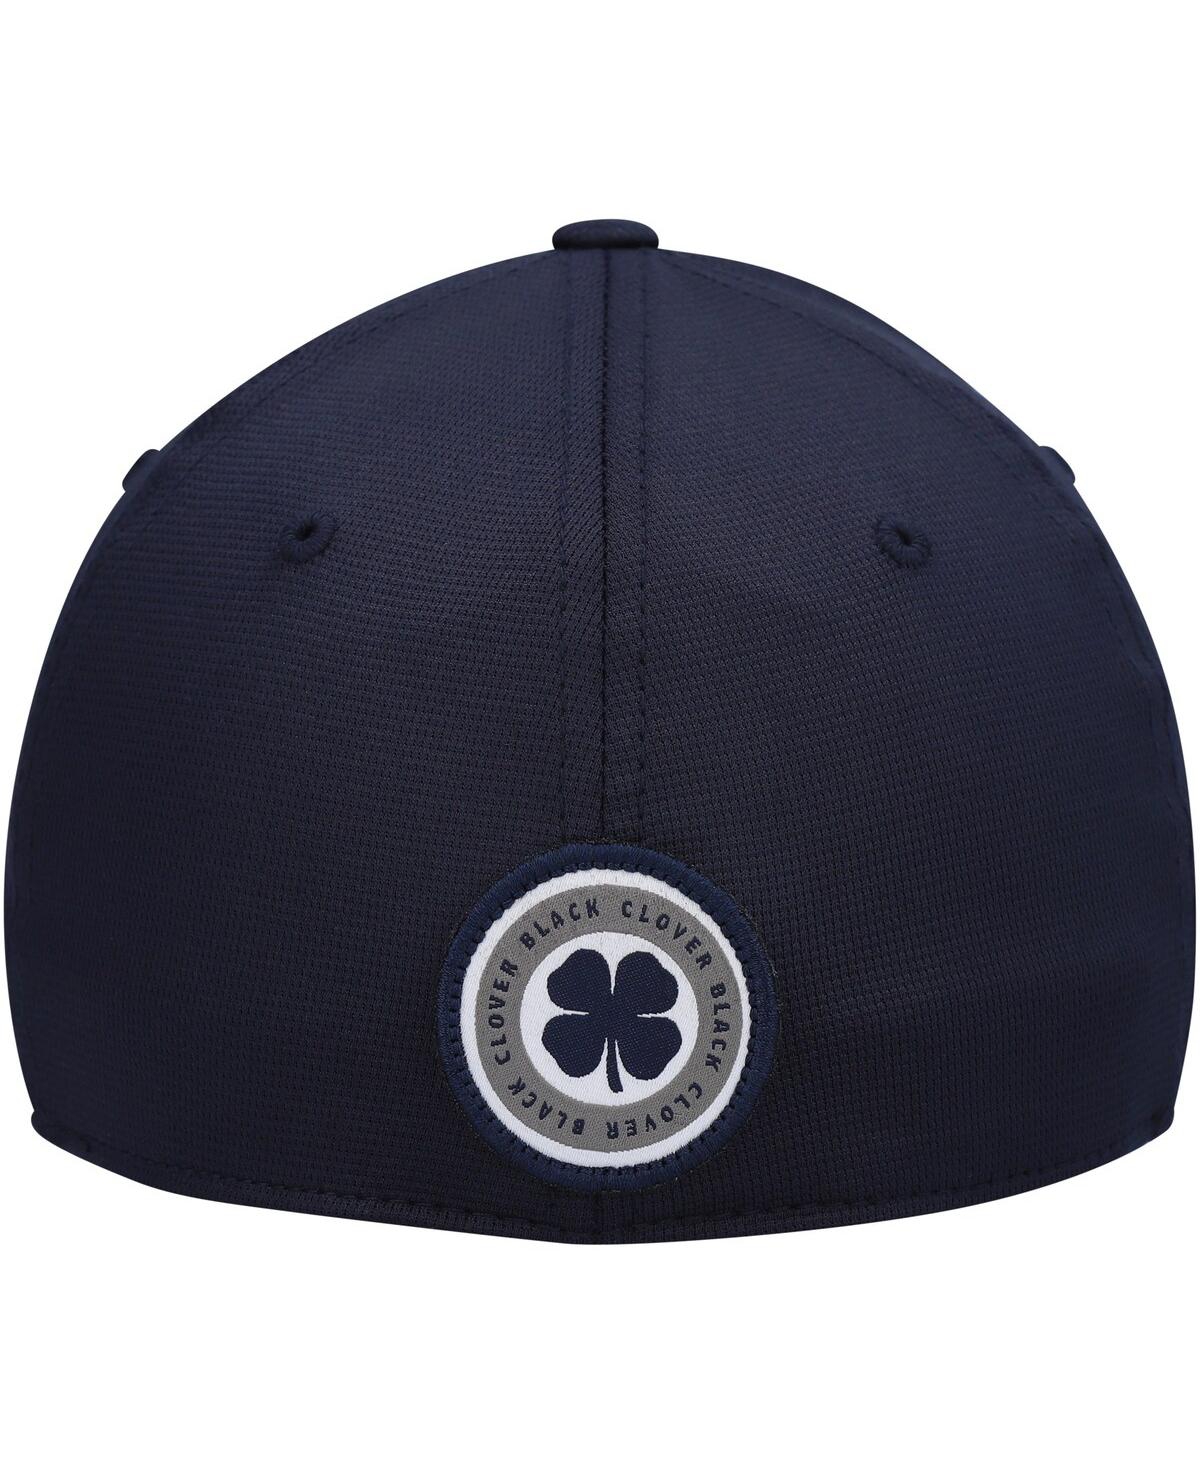 Shop Black Clover Men's Navy Utah State Aggies Spirit Flex Hat